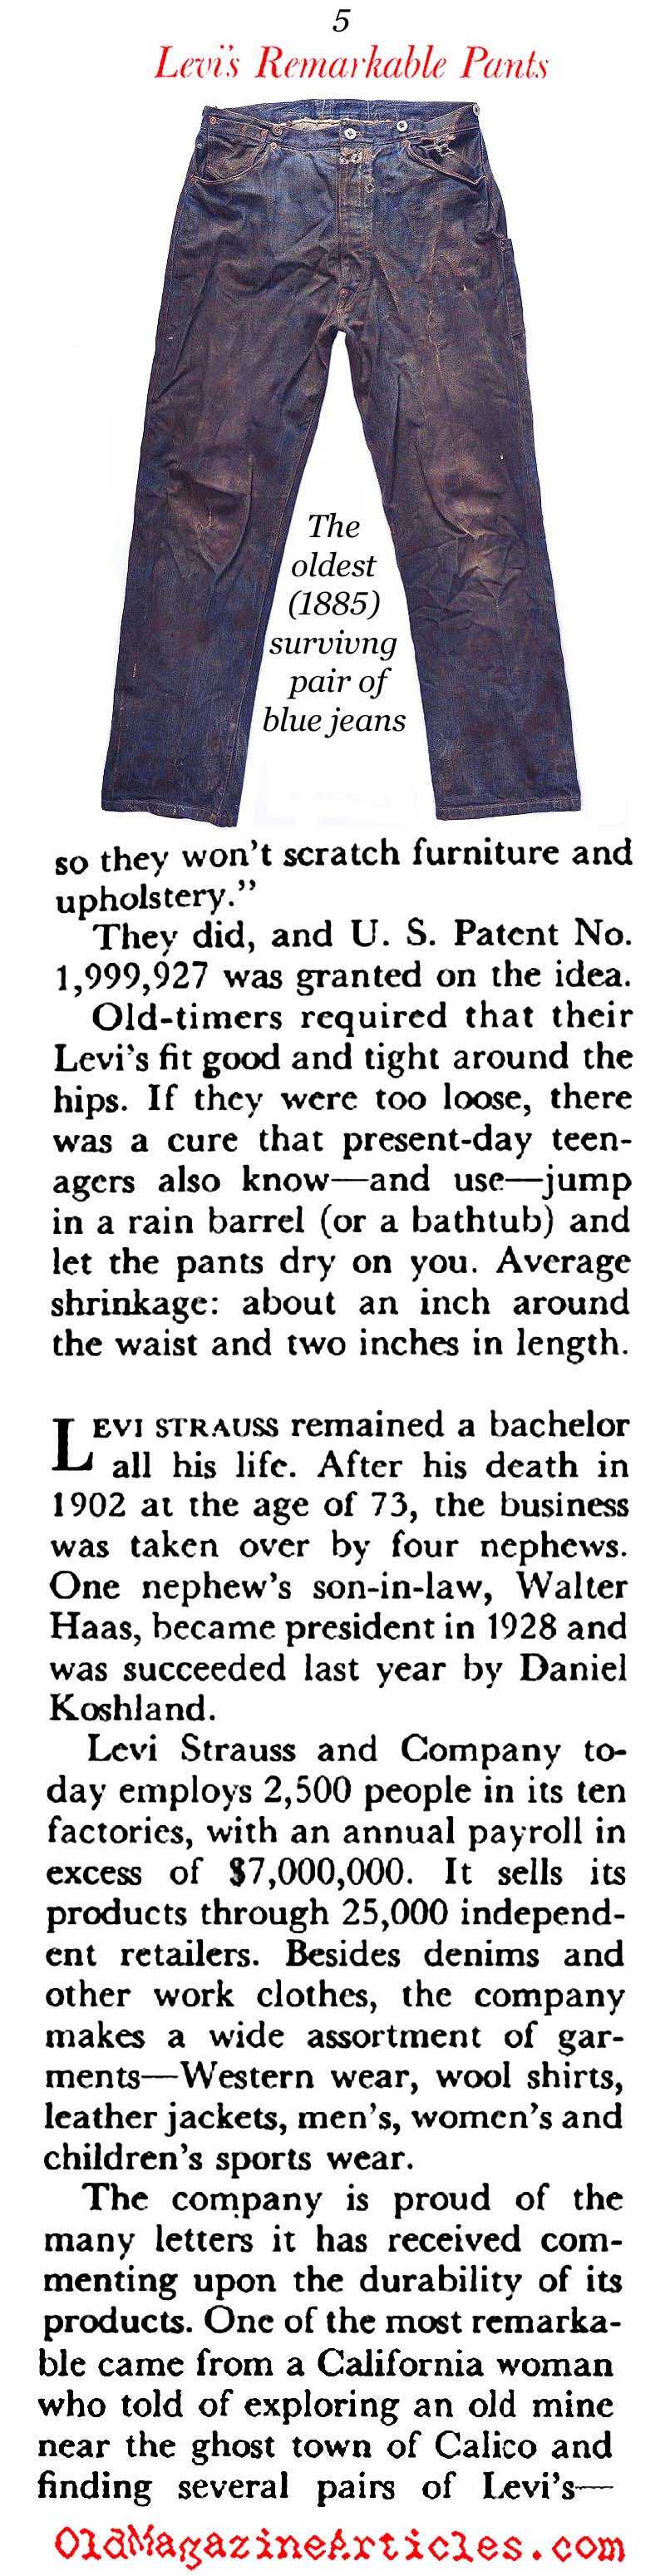 Levi Strauss and his Denim (Coronet Magazine, 1956)